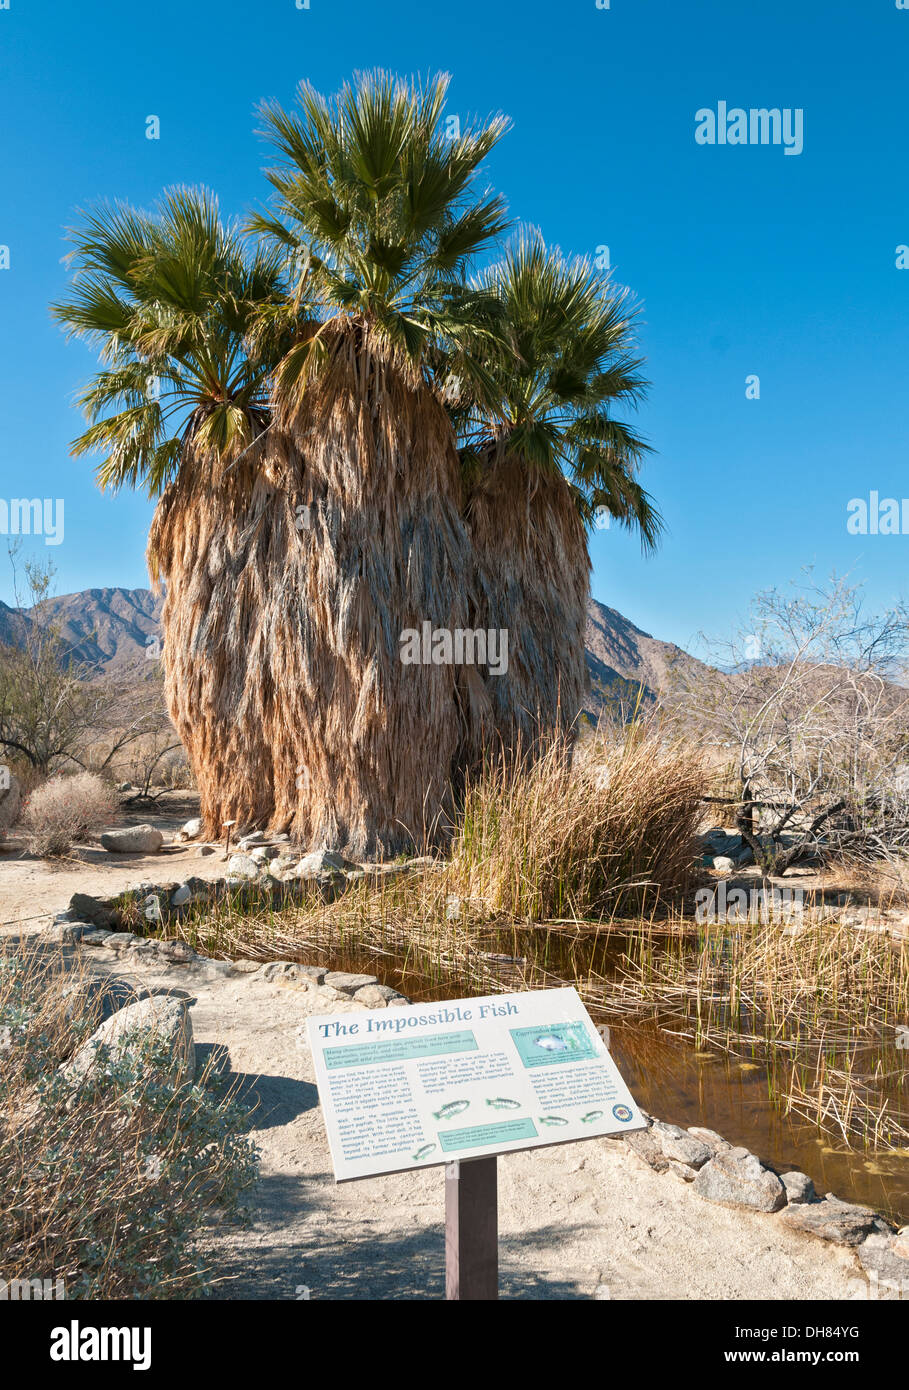 La Californie, San Diego County, Anza-Borrego Desert State Park, Desert Garden Trail, pupfish (Cyprinodon macularius) info sign Banque D'Images